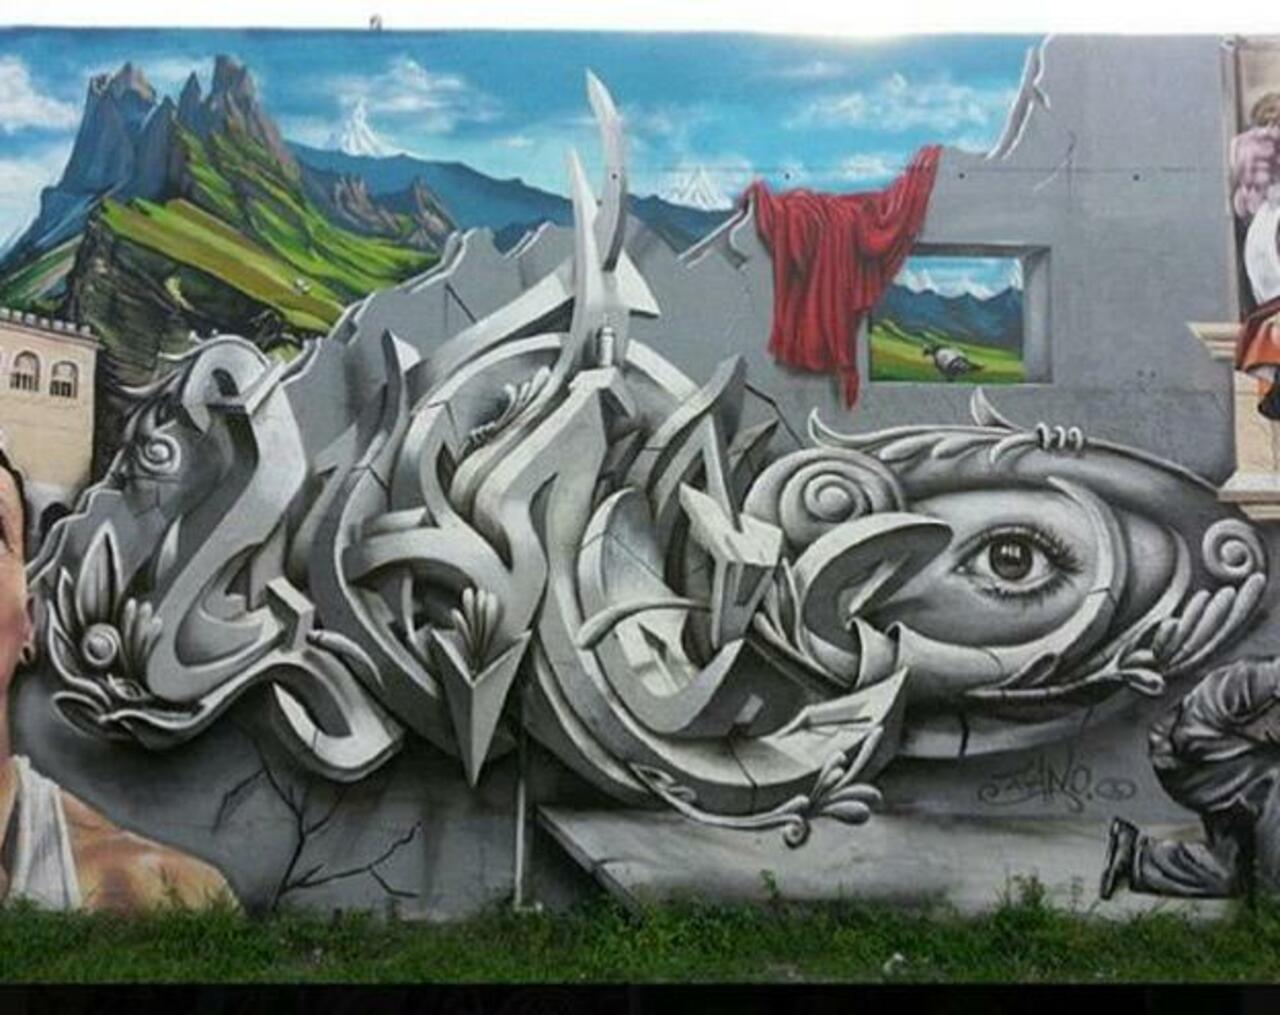 Street Art by Smog One

#art #mural #graffiti #streetart http://t.co/Q7r1M7pvQM